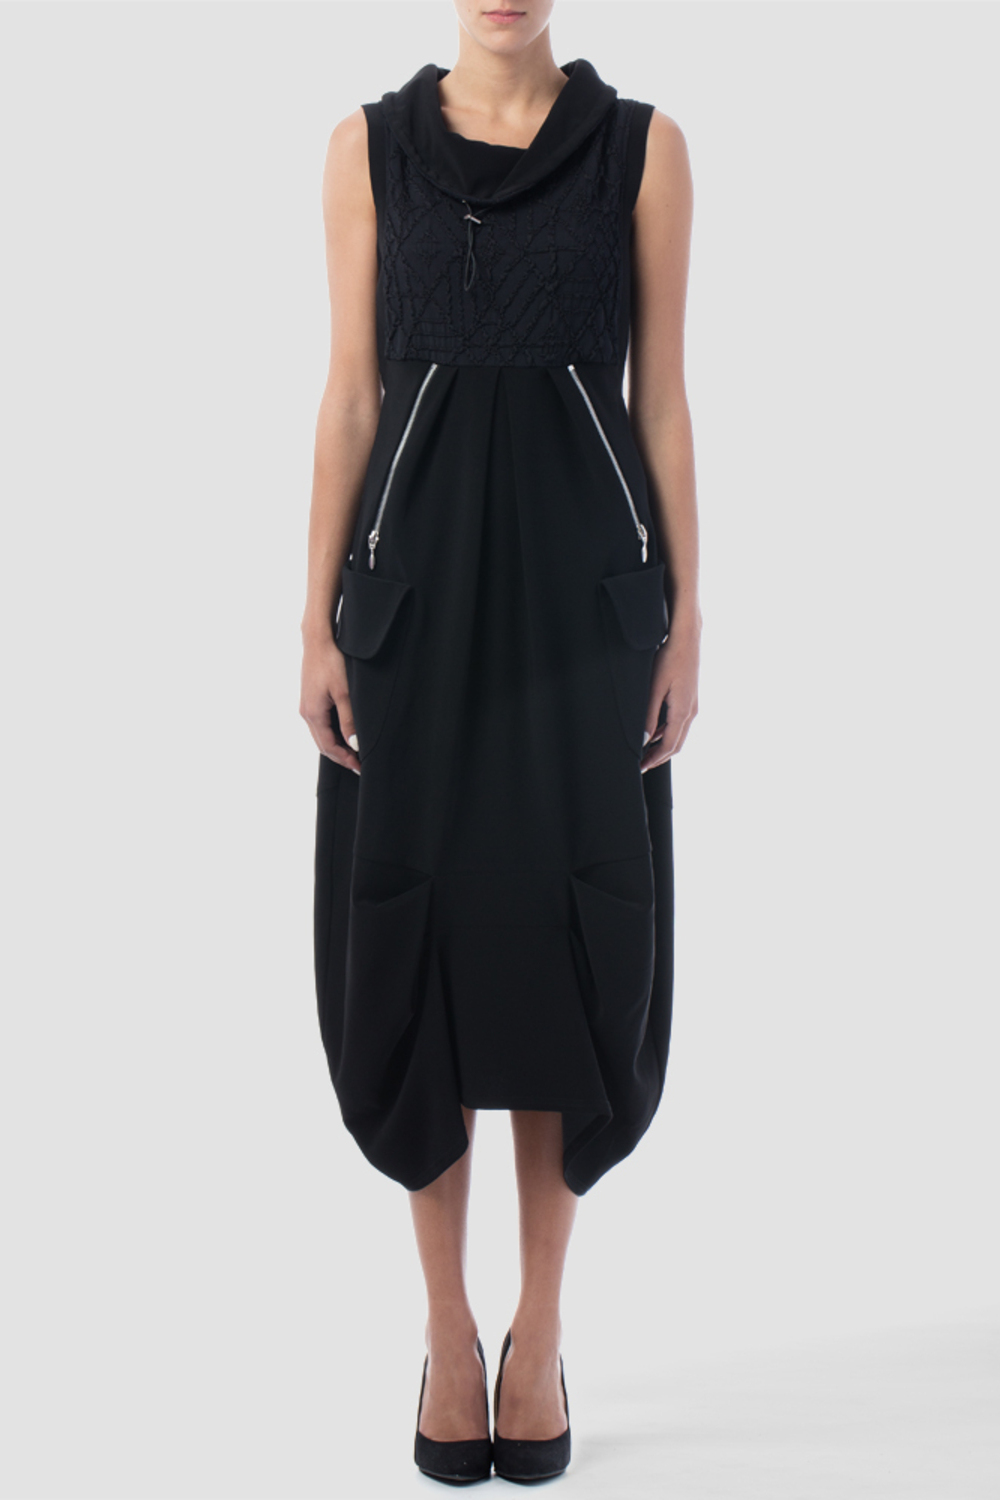 Joseph Ribkoff dress style 153879. Black/black